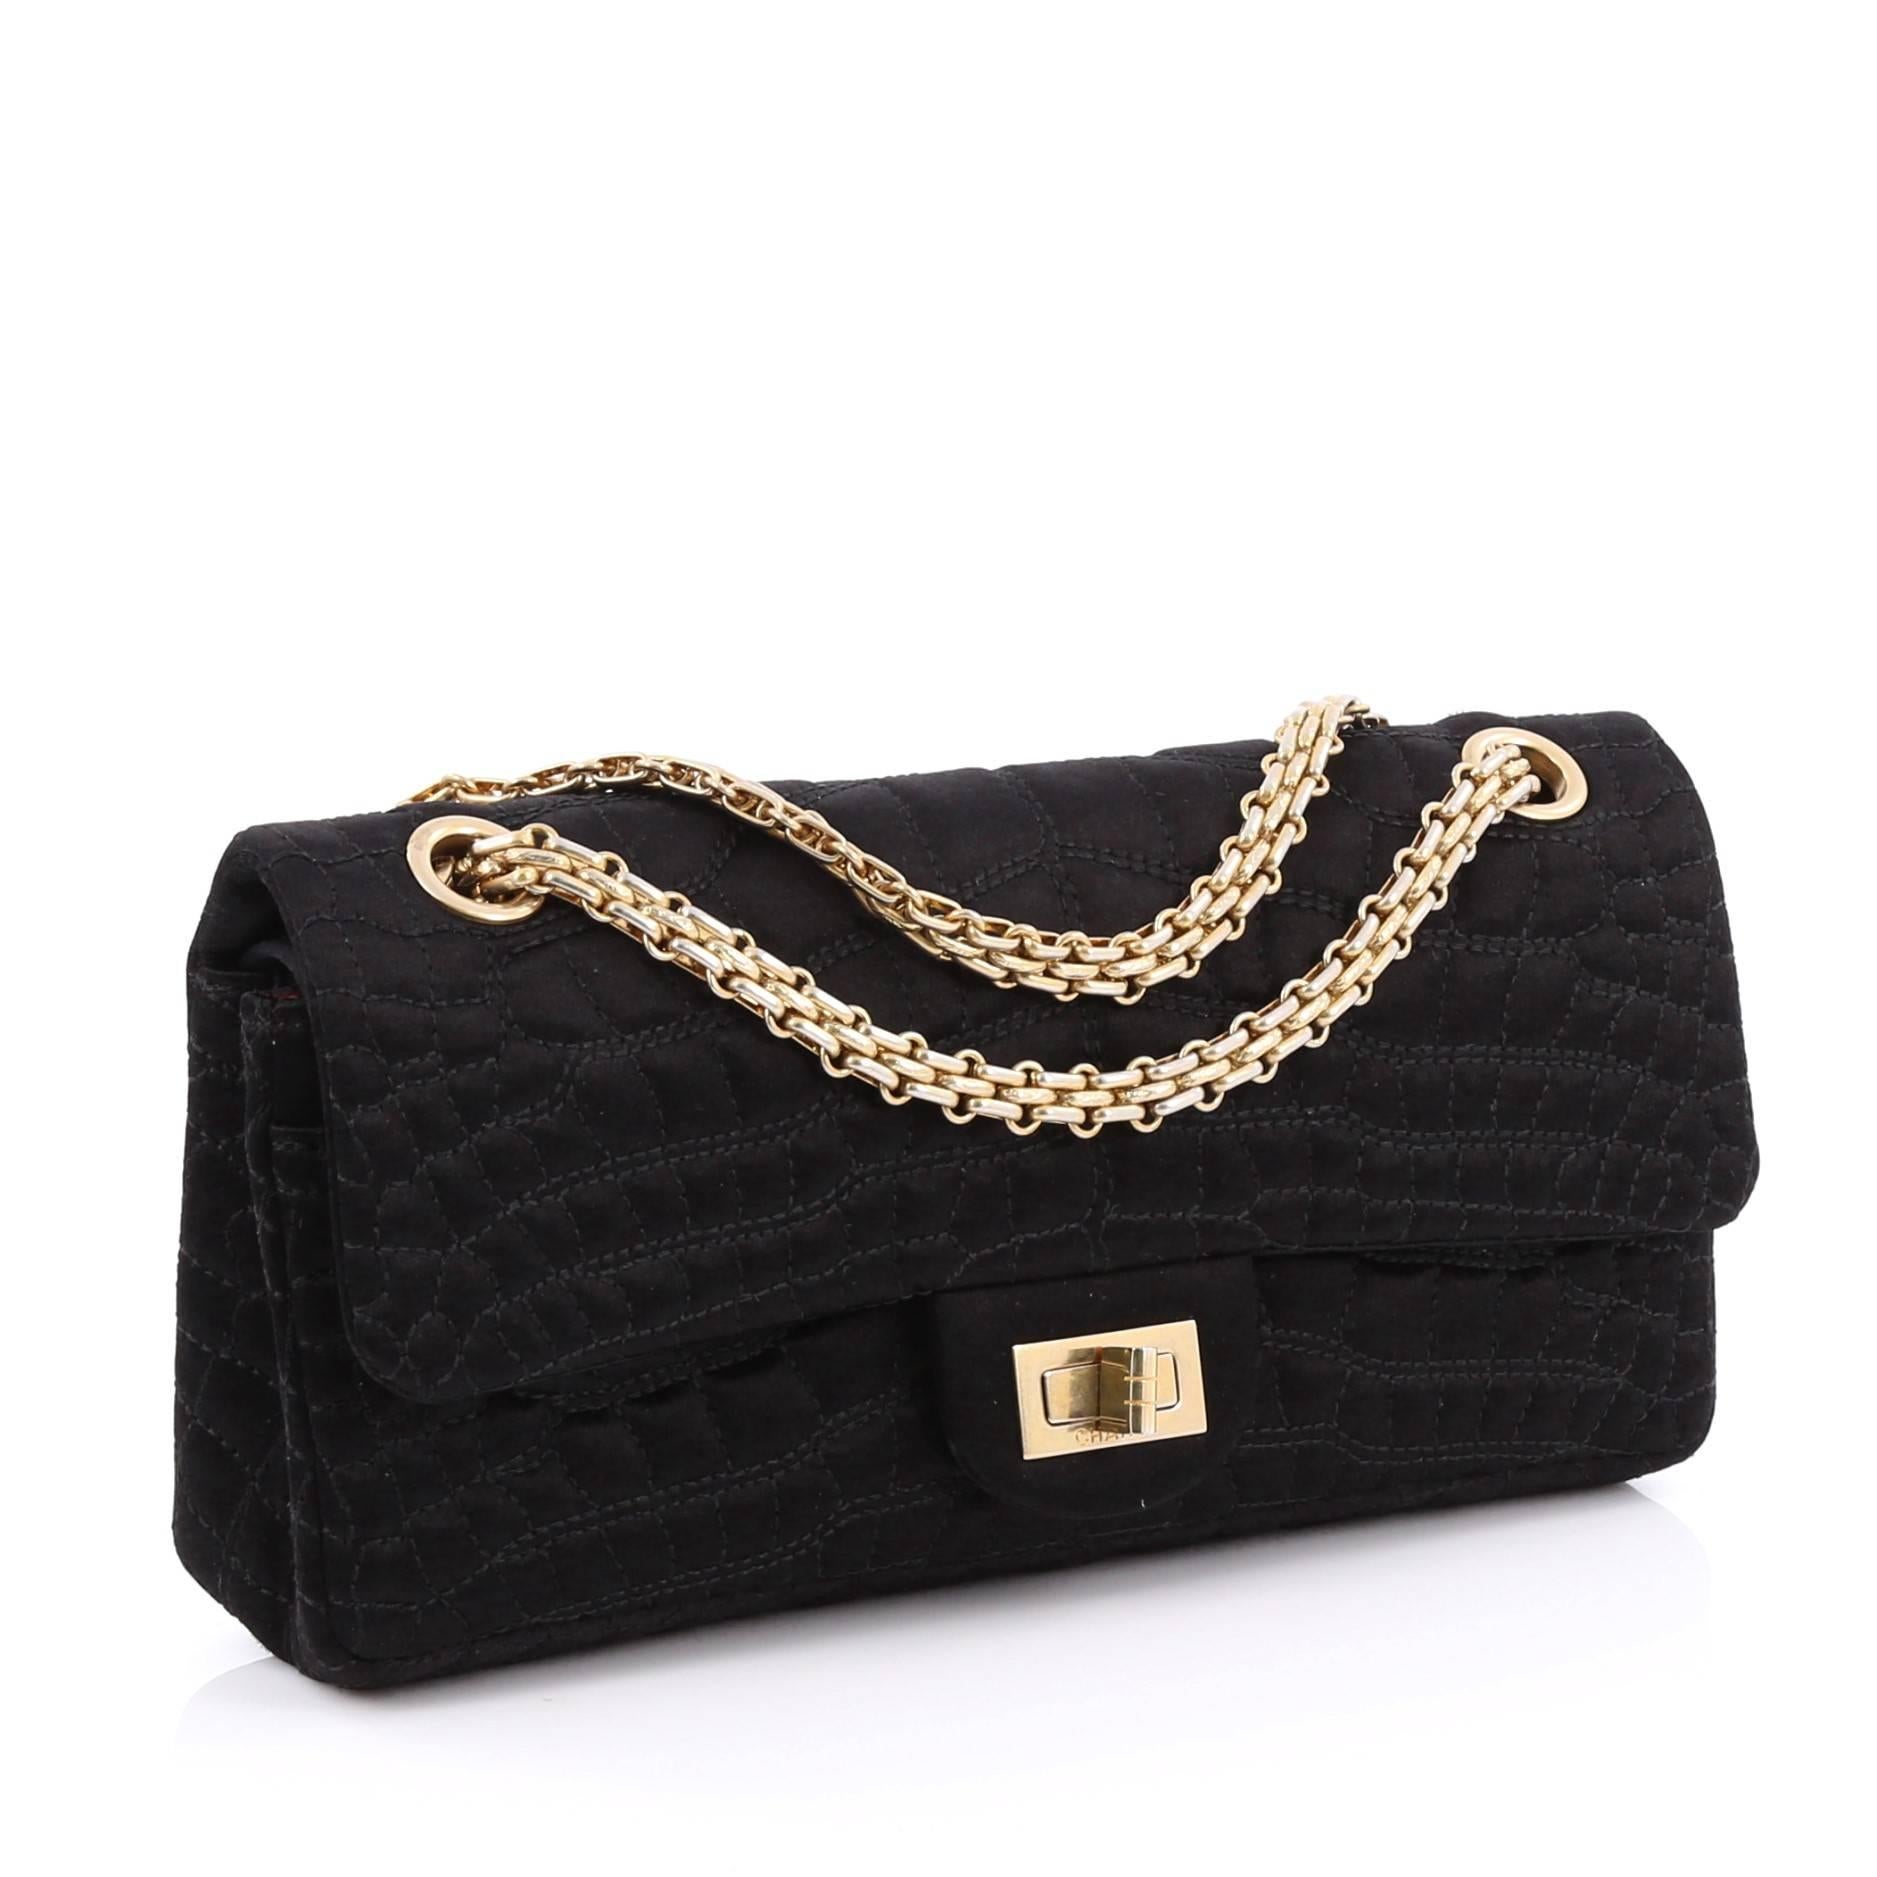 Black Chanel Reissue 2.55 Handbag Crocodile Quilted Satin 225